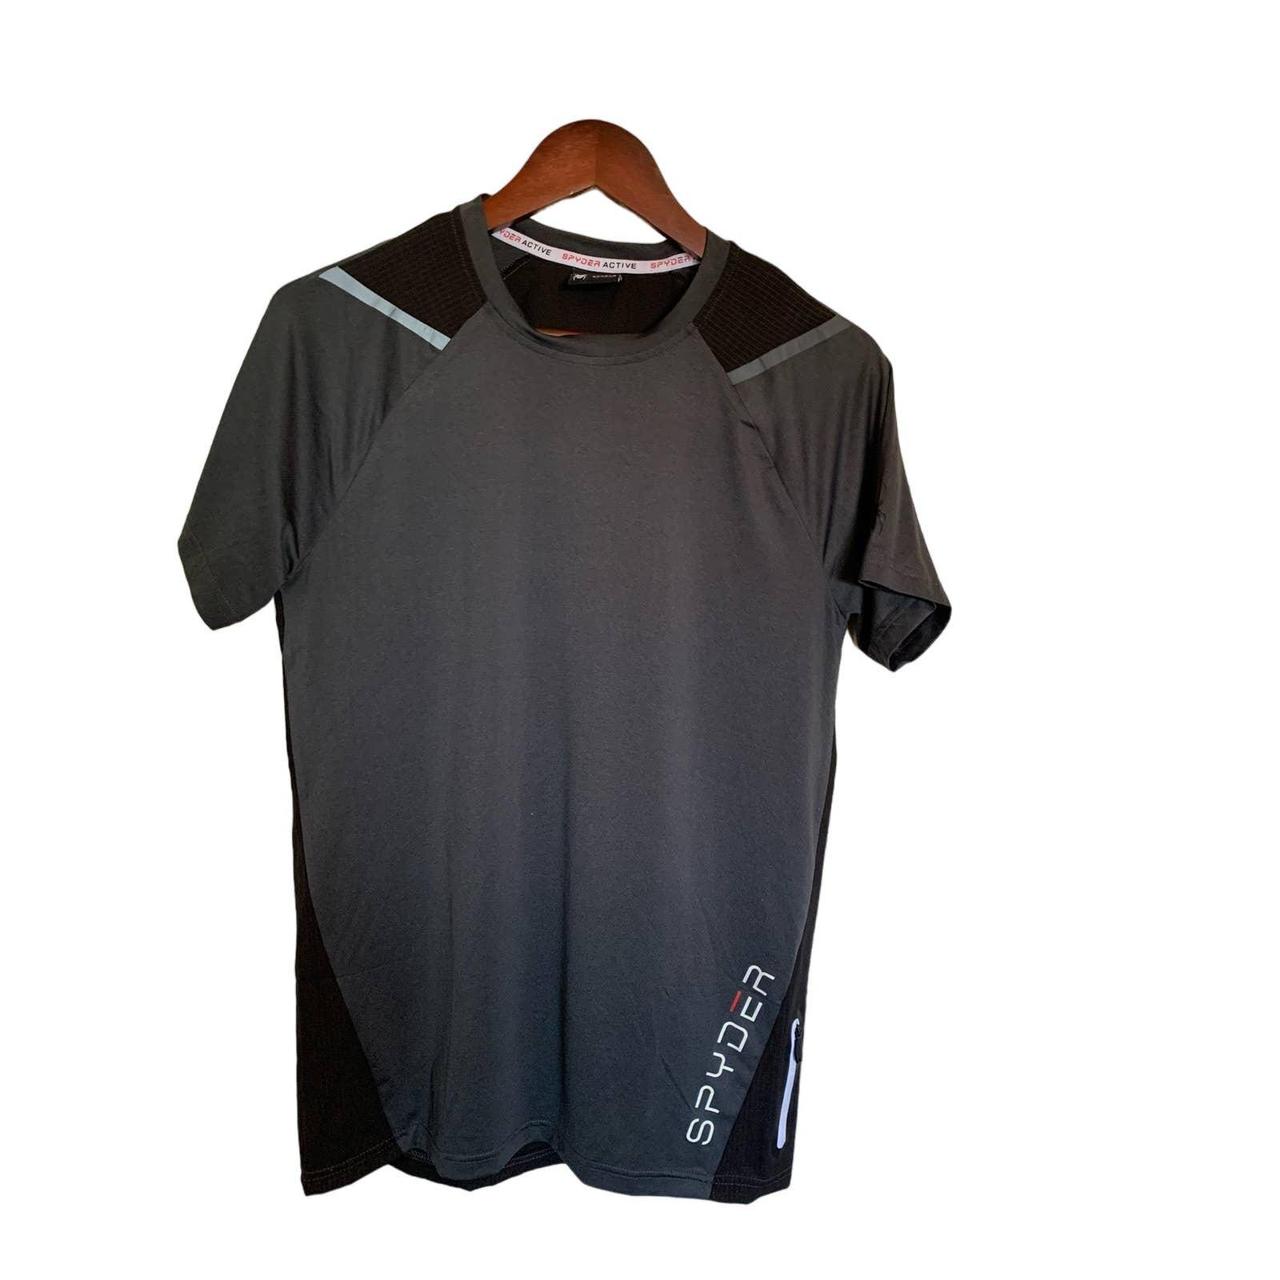 Spyder activewear crew neck shirt short sleeve - Depop